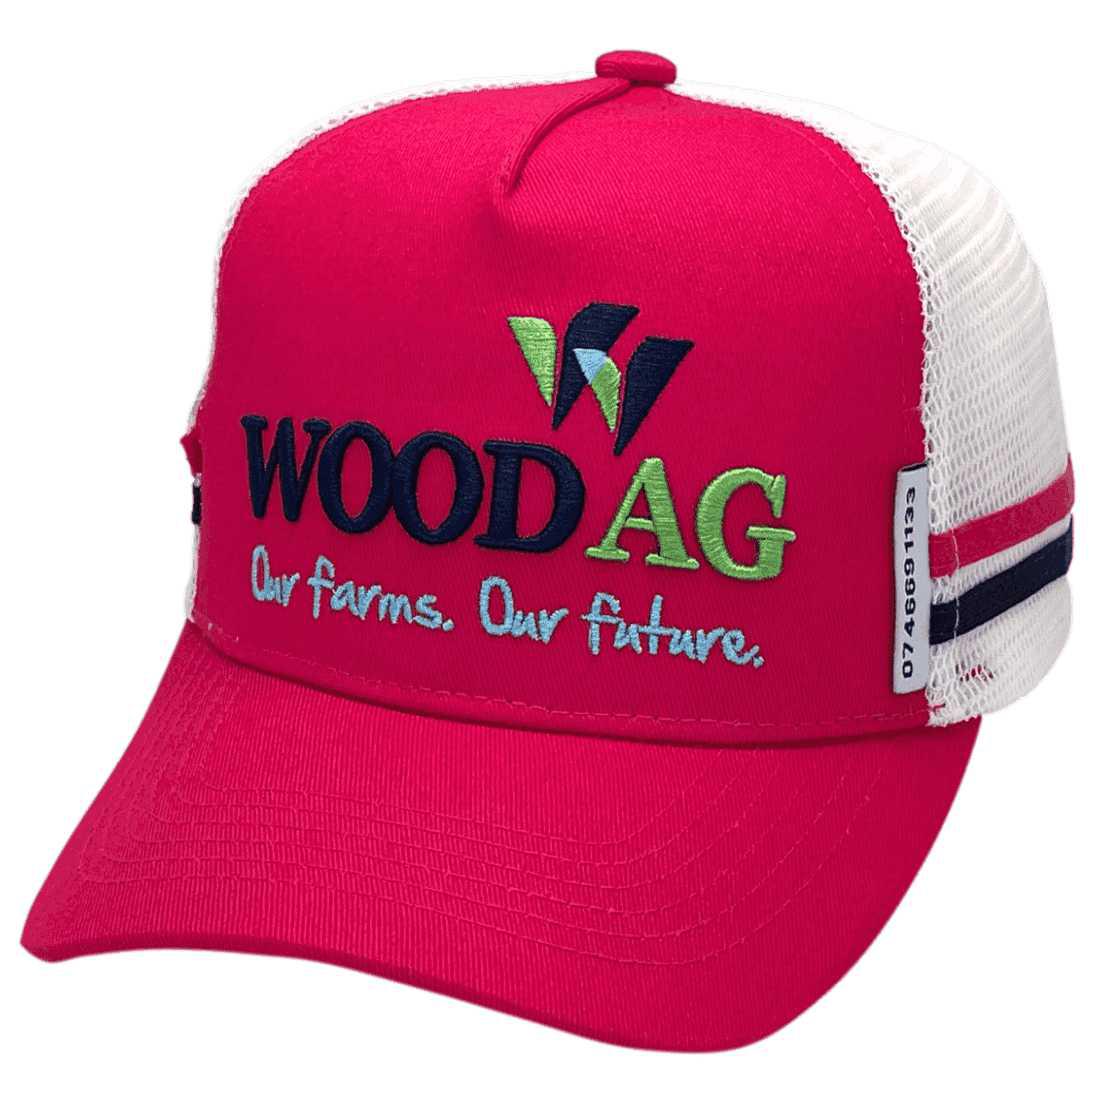 Wood Ag Chinchilla Qld Basic Aussie Trucker Hat